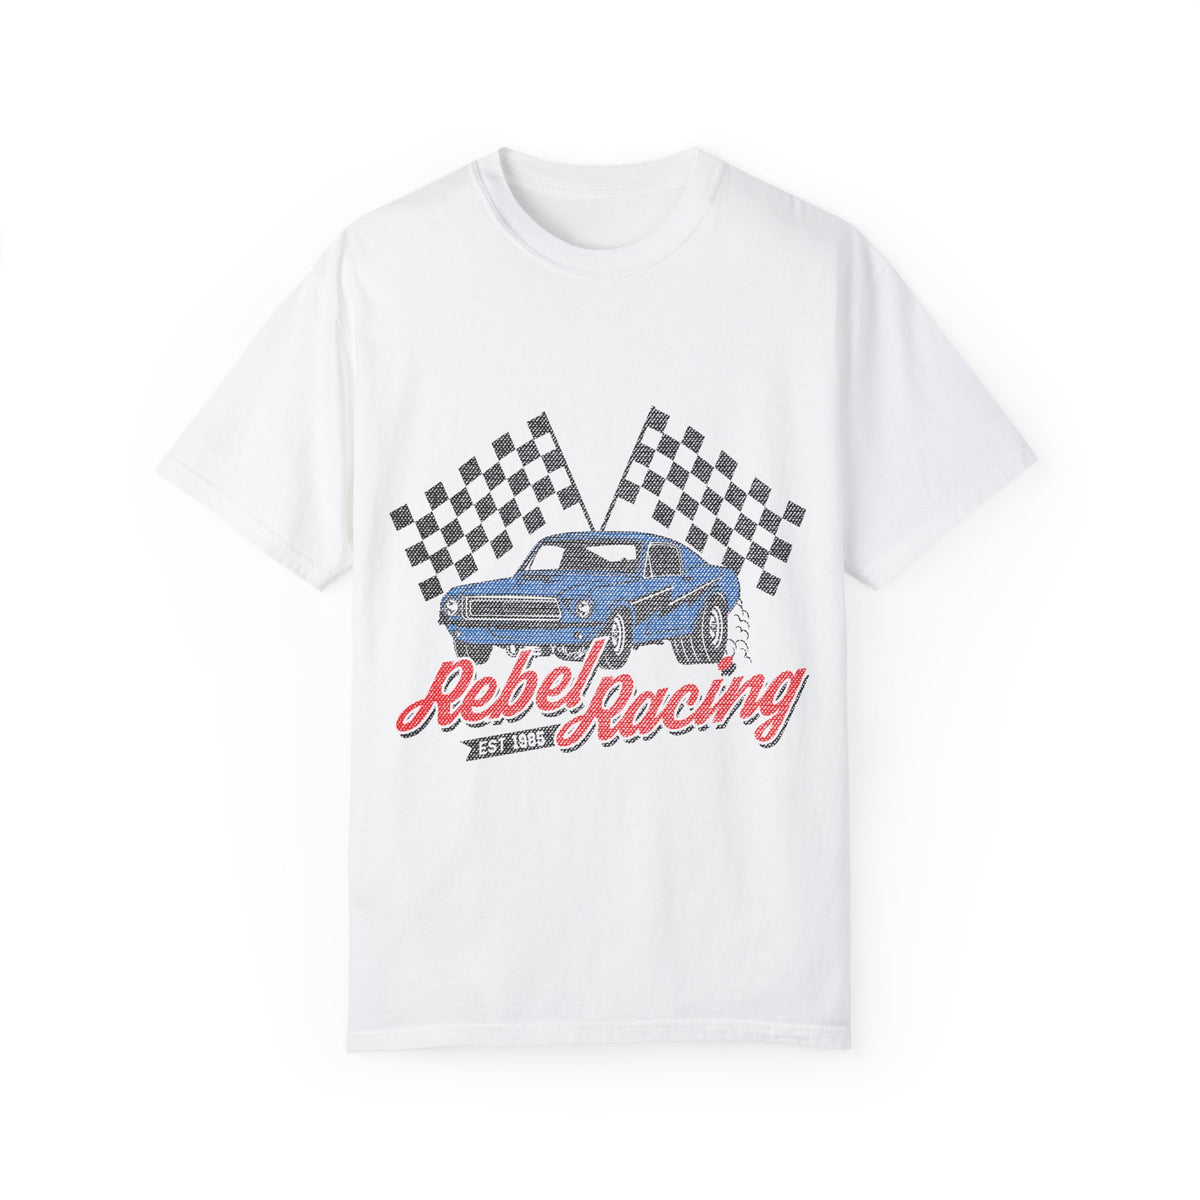 Rebel Racing Vintage Car T-shirt | Vintage Graphic Tee | Comfort Colors